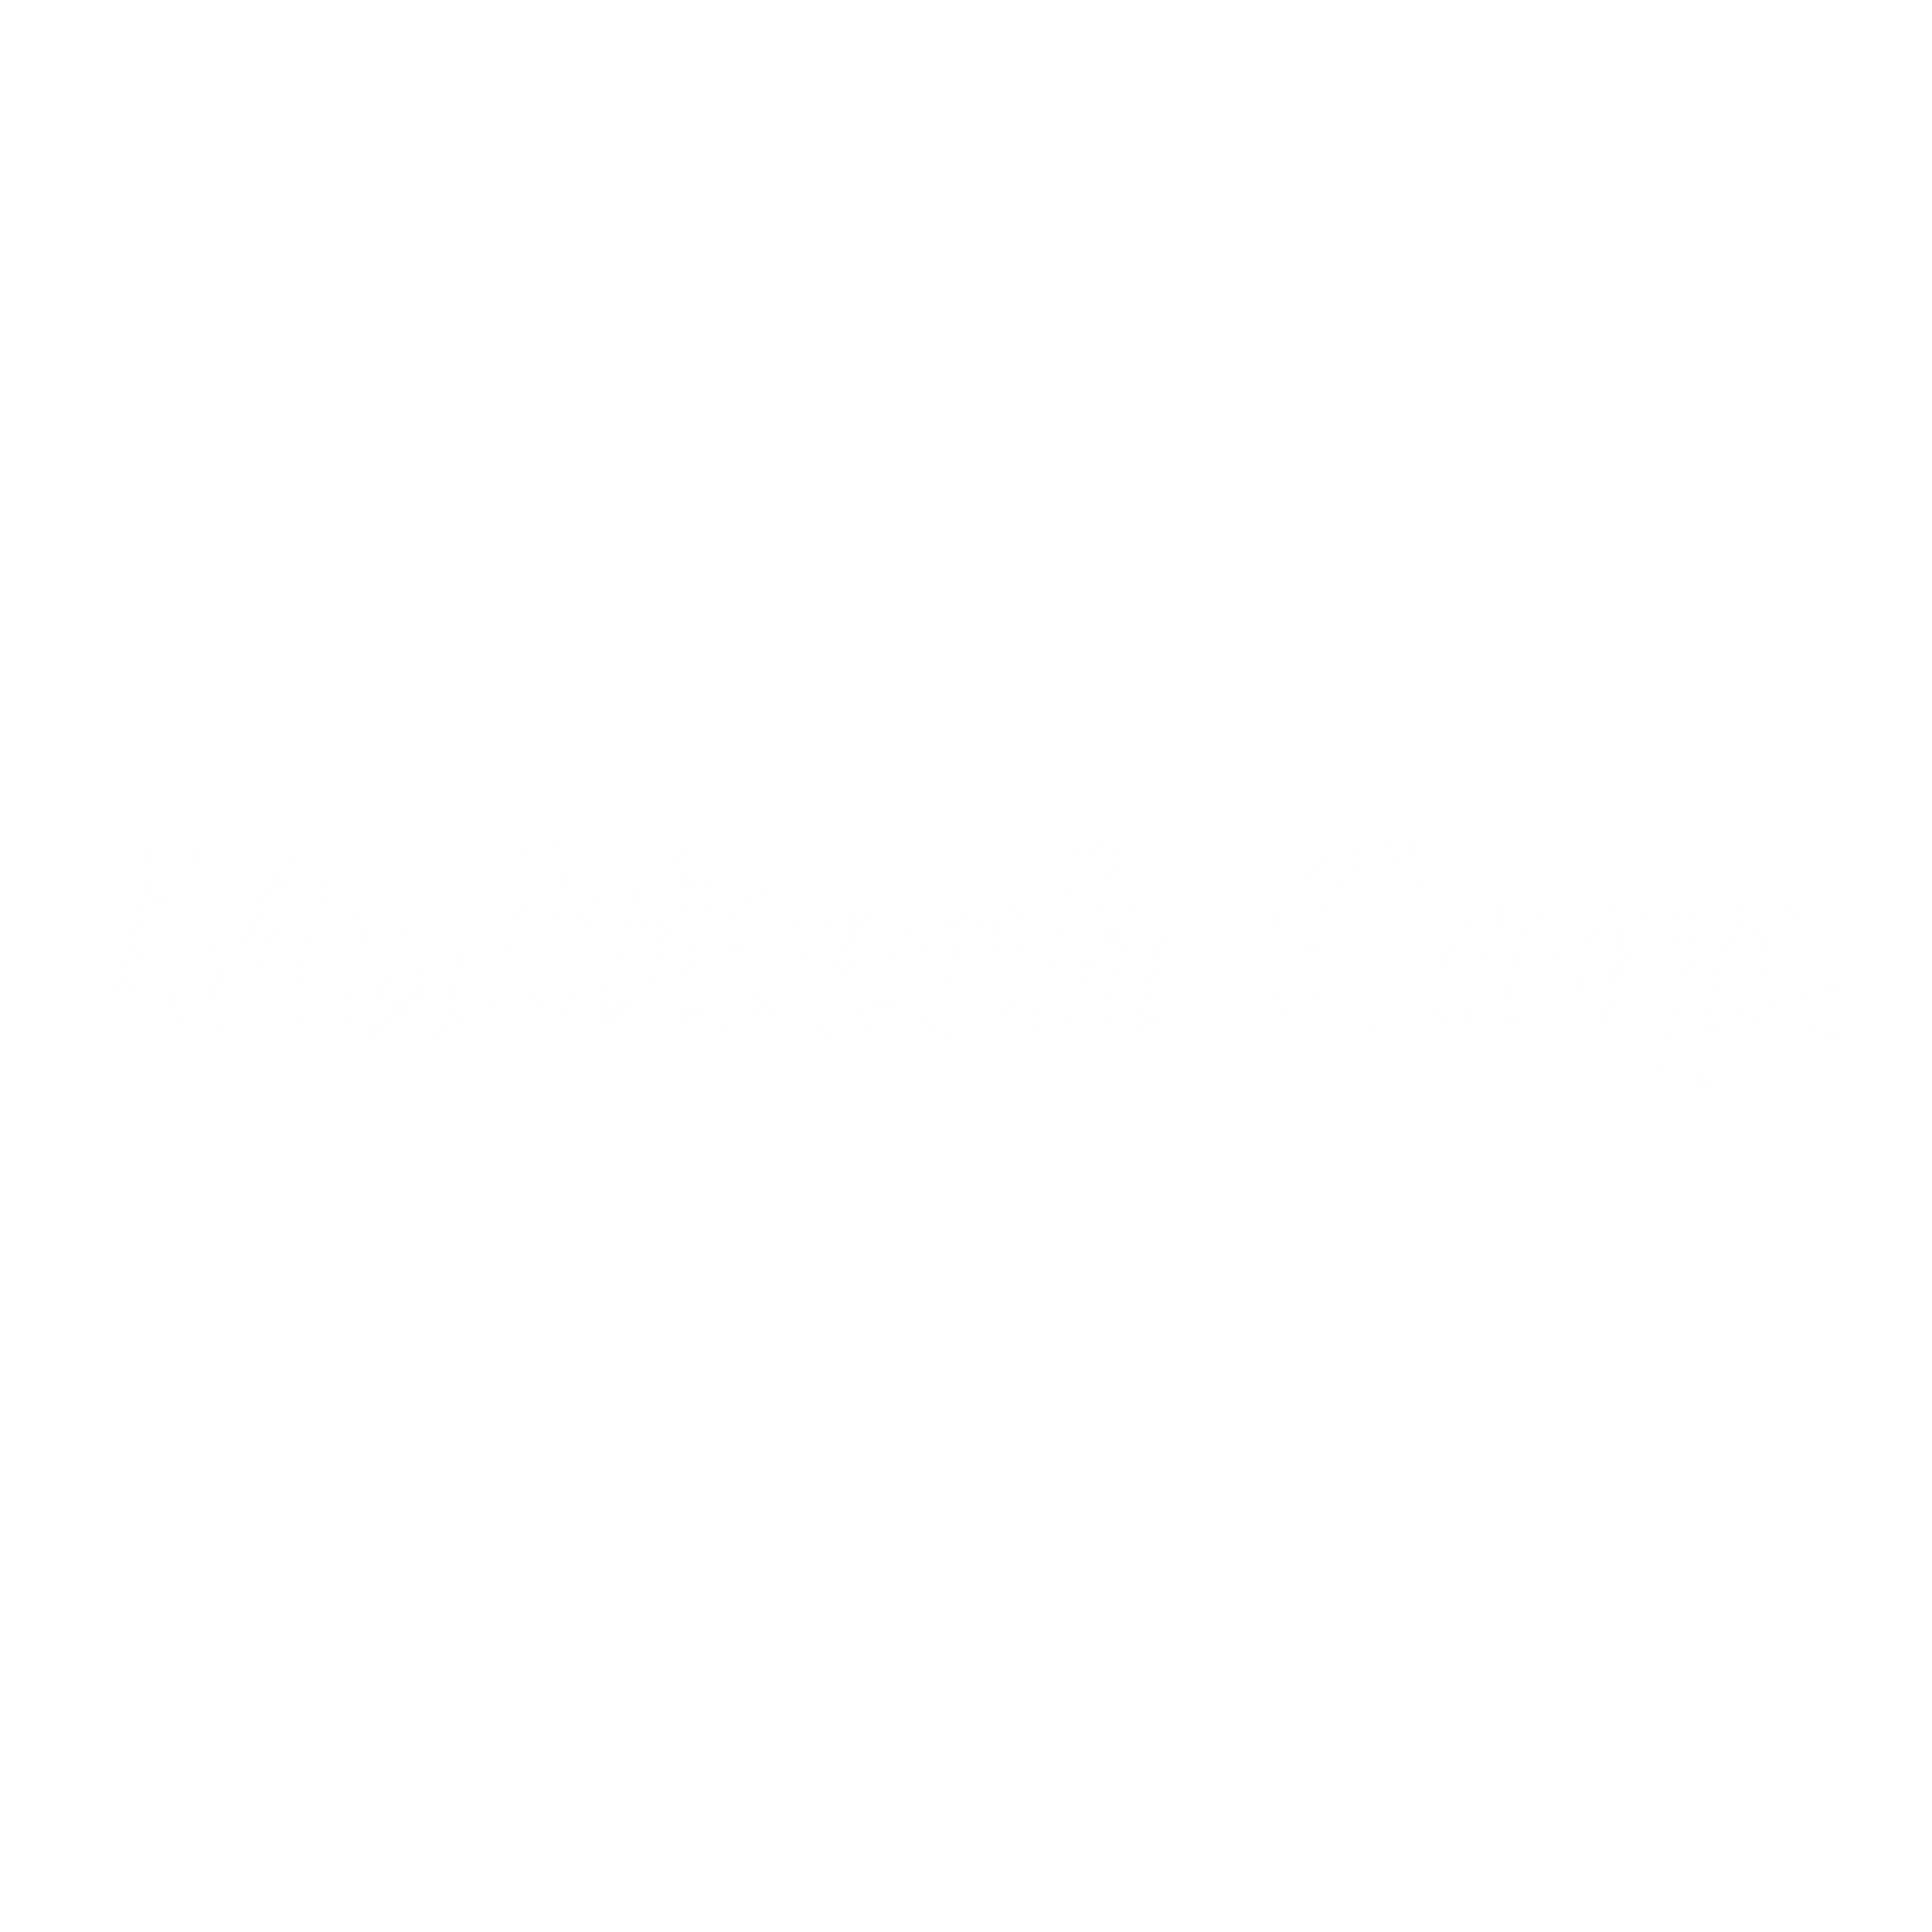 Multitech Logo - Multitech Logo PNG Transparent & SVG Vector - Freebie Supply